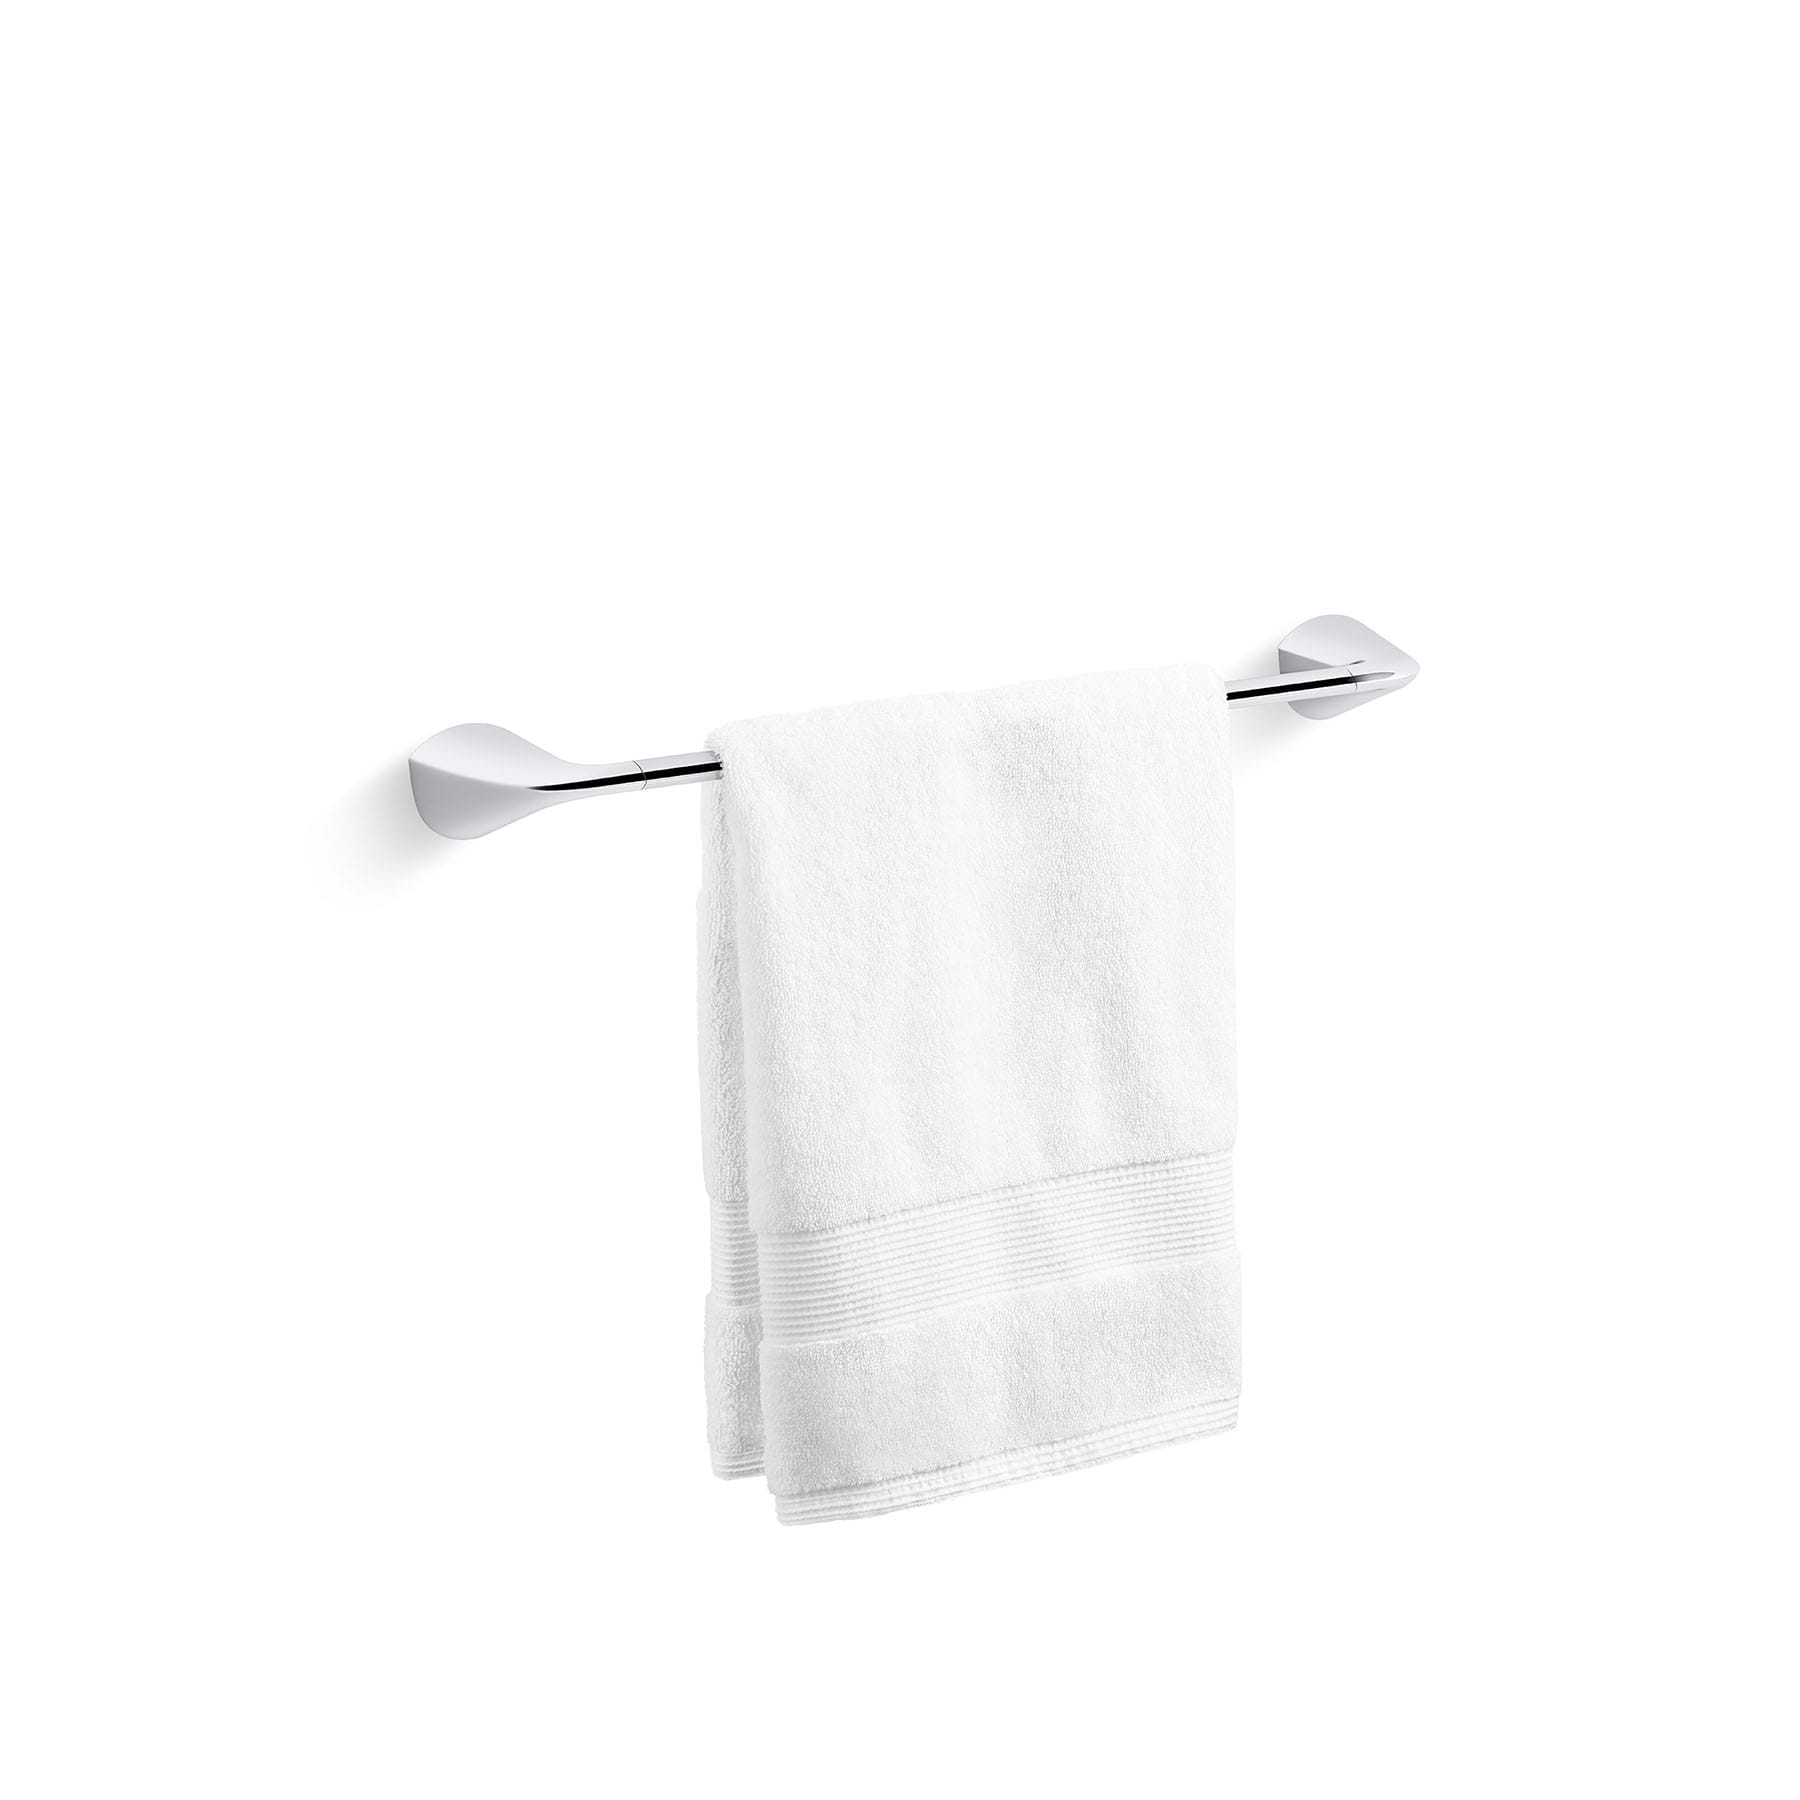 KOHLER Avail Vibrant Brushed Moderne Brass Wall Mount Single Towel